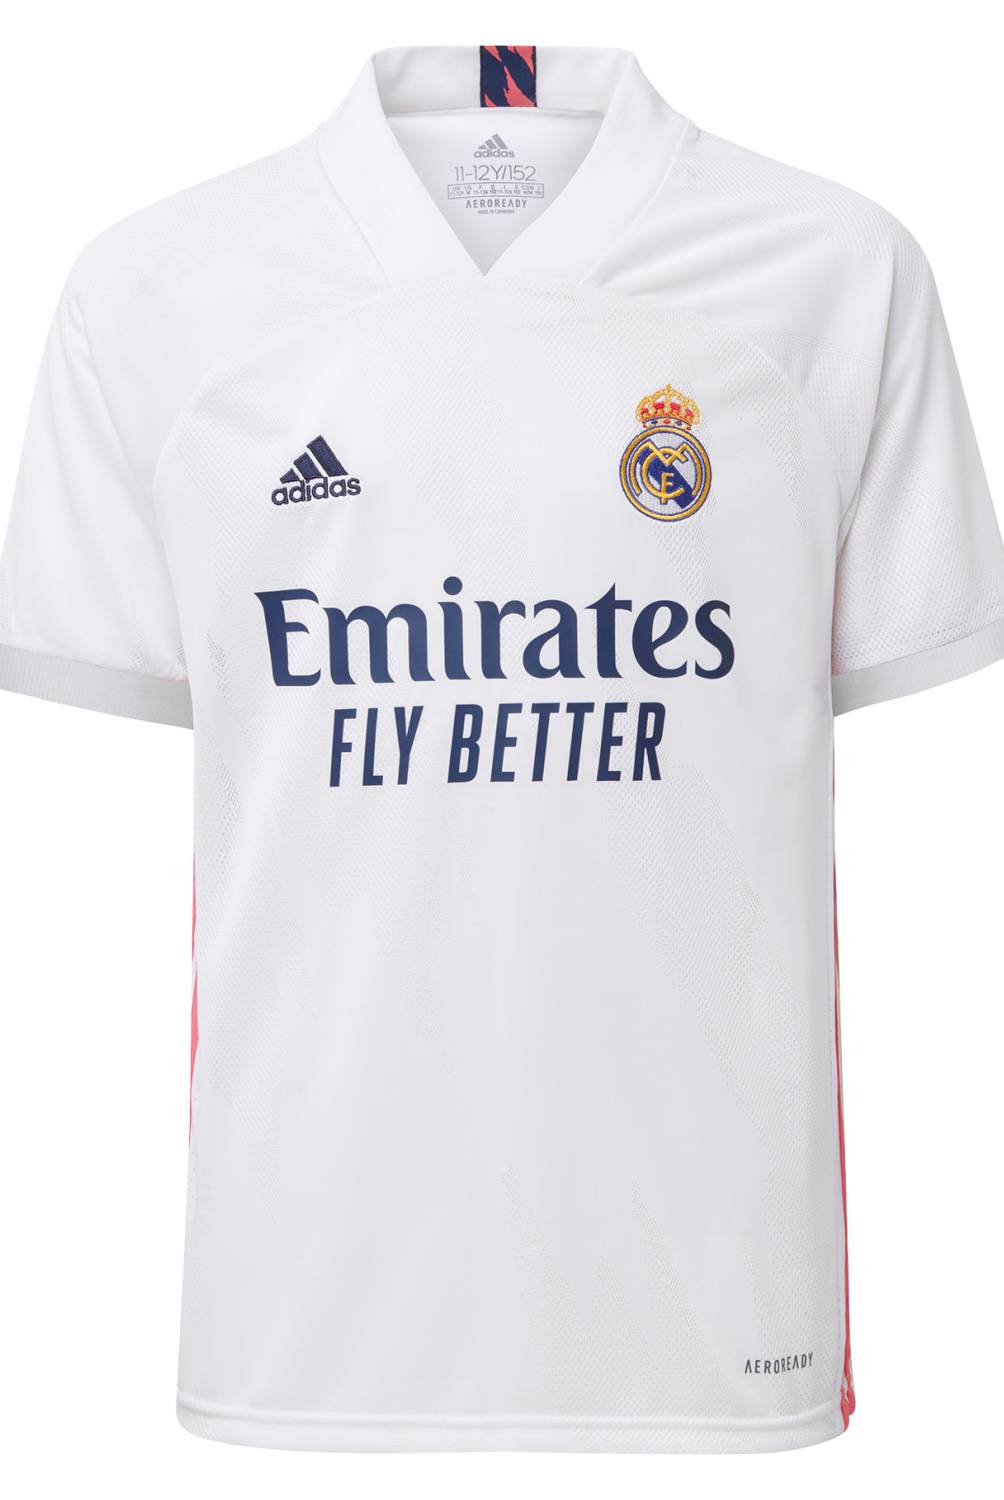 Adidas - Adidas Camiseta de Fútbol Real Madrid Niño